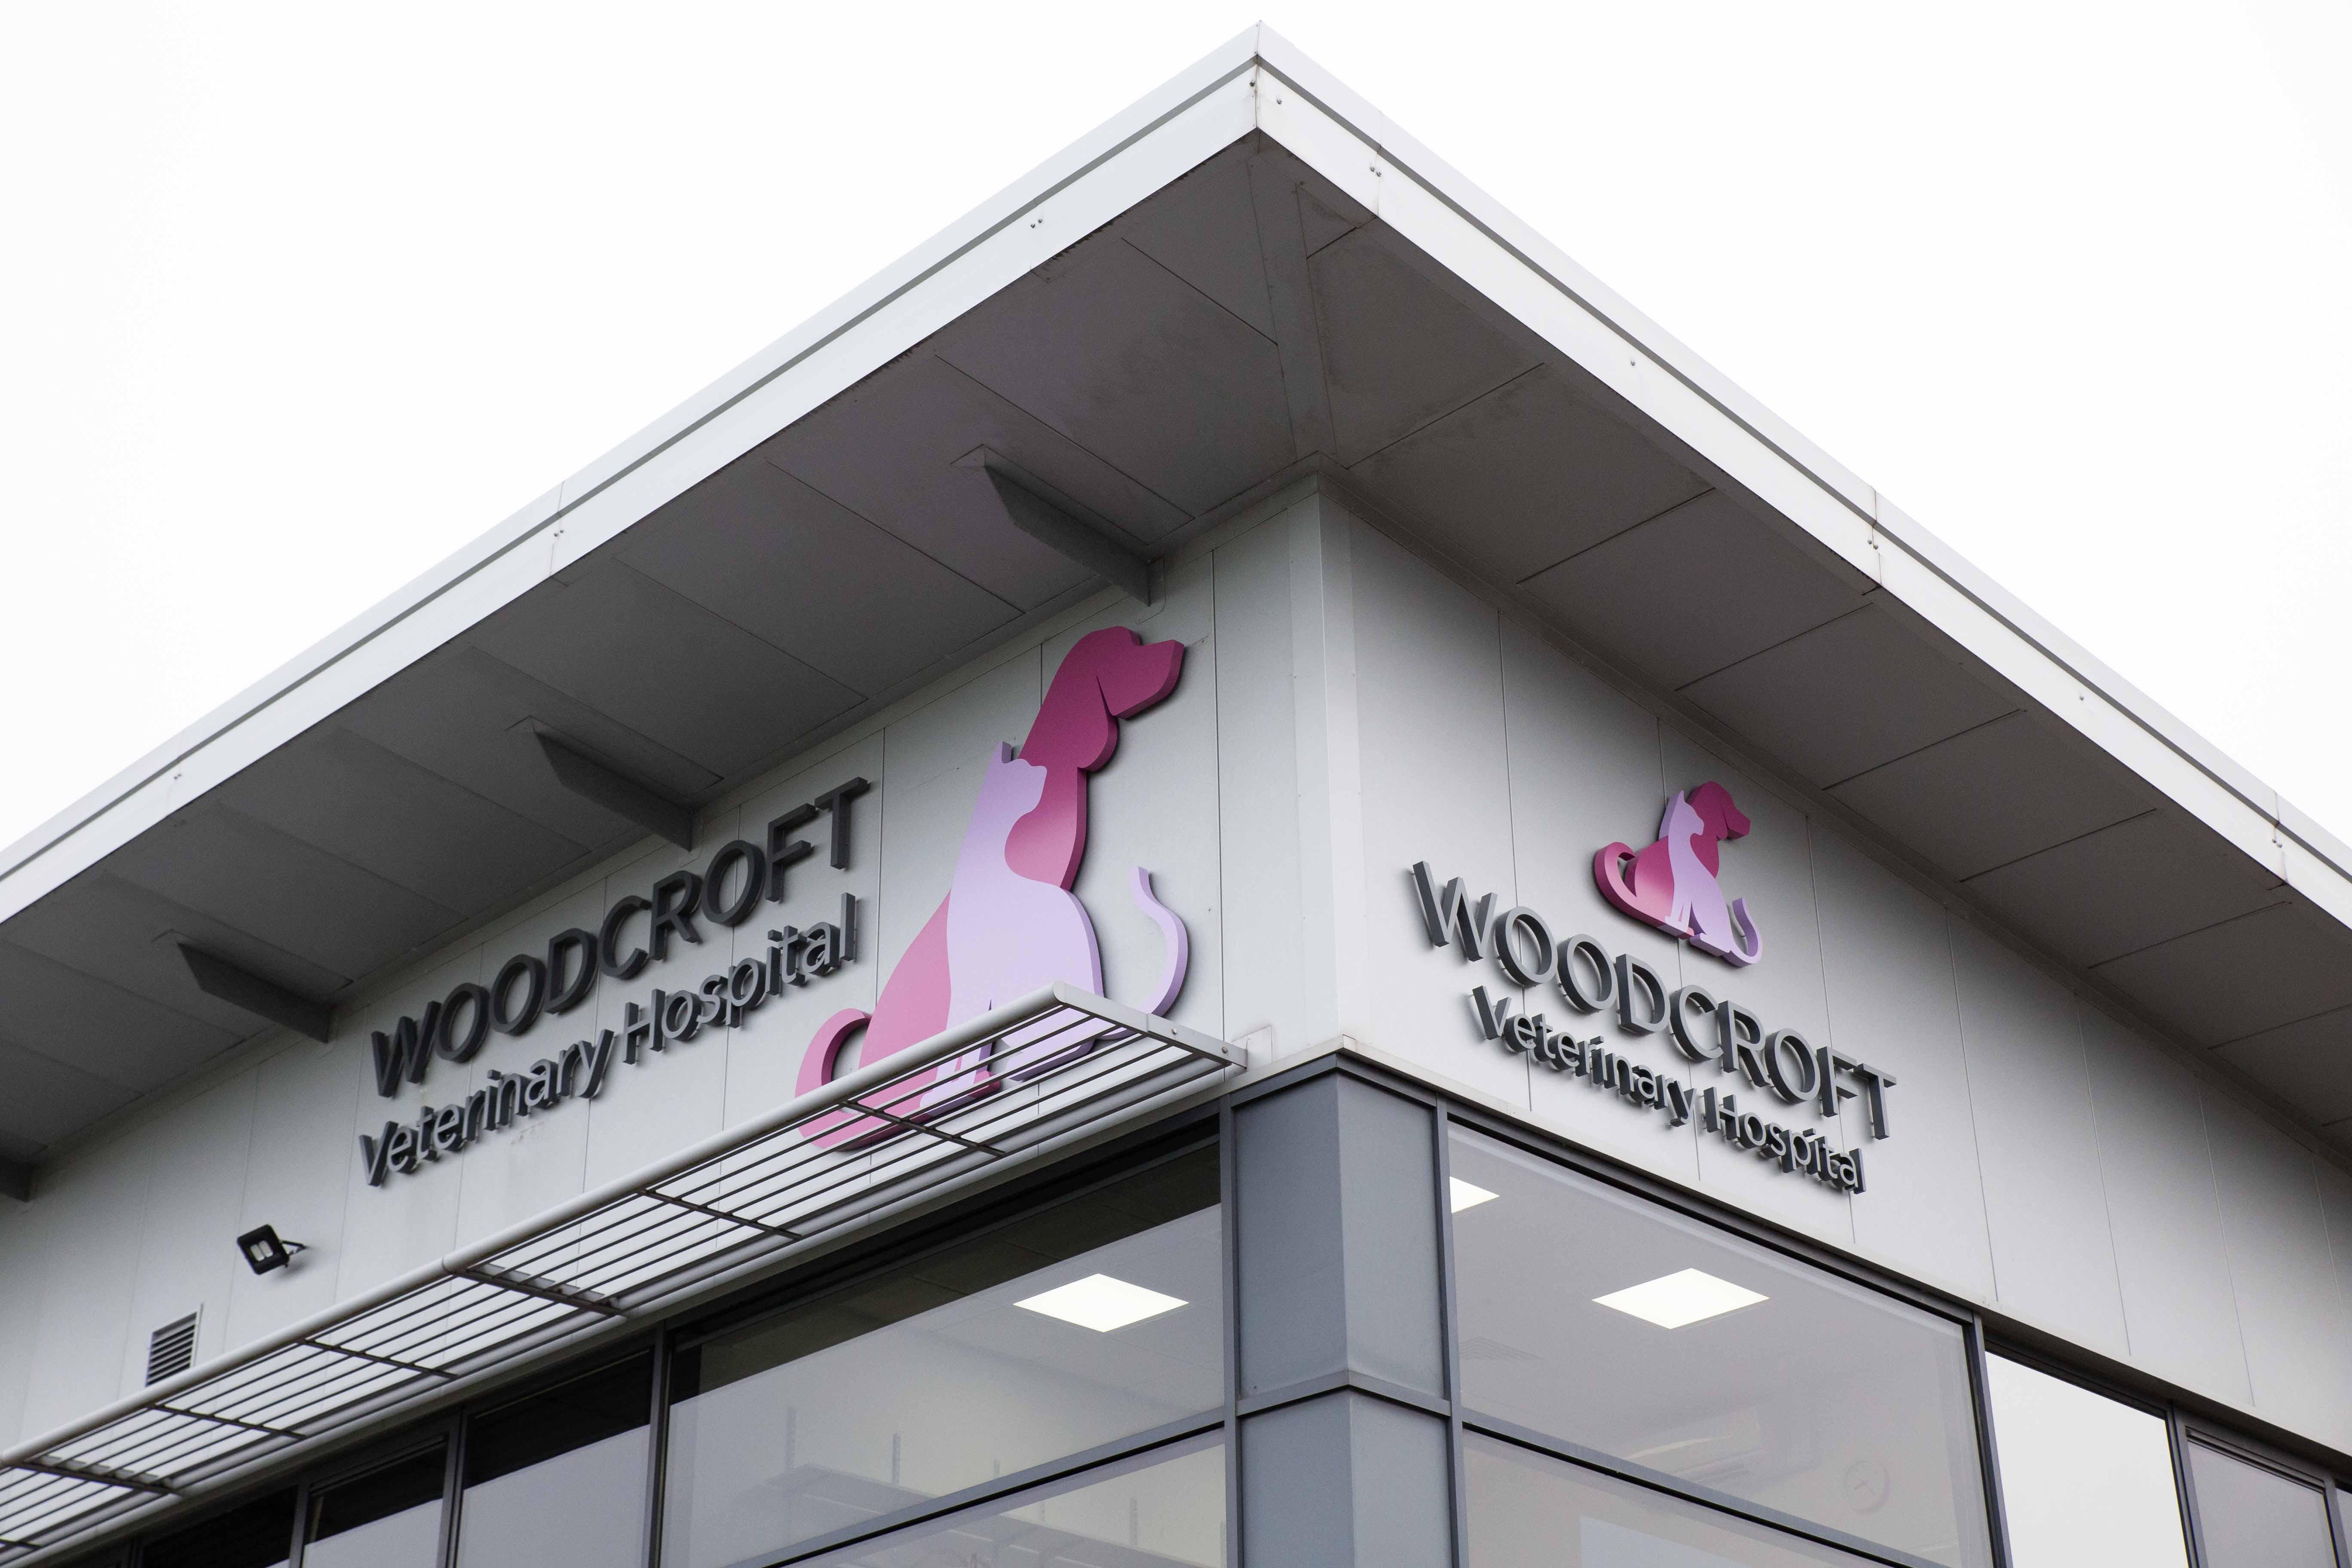 Images Woodcroft Veterinary Hospital